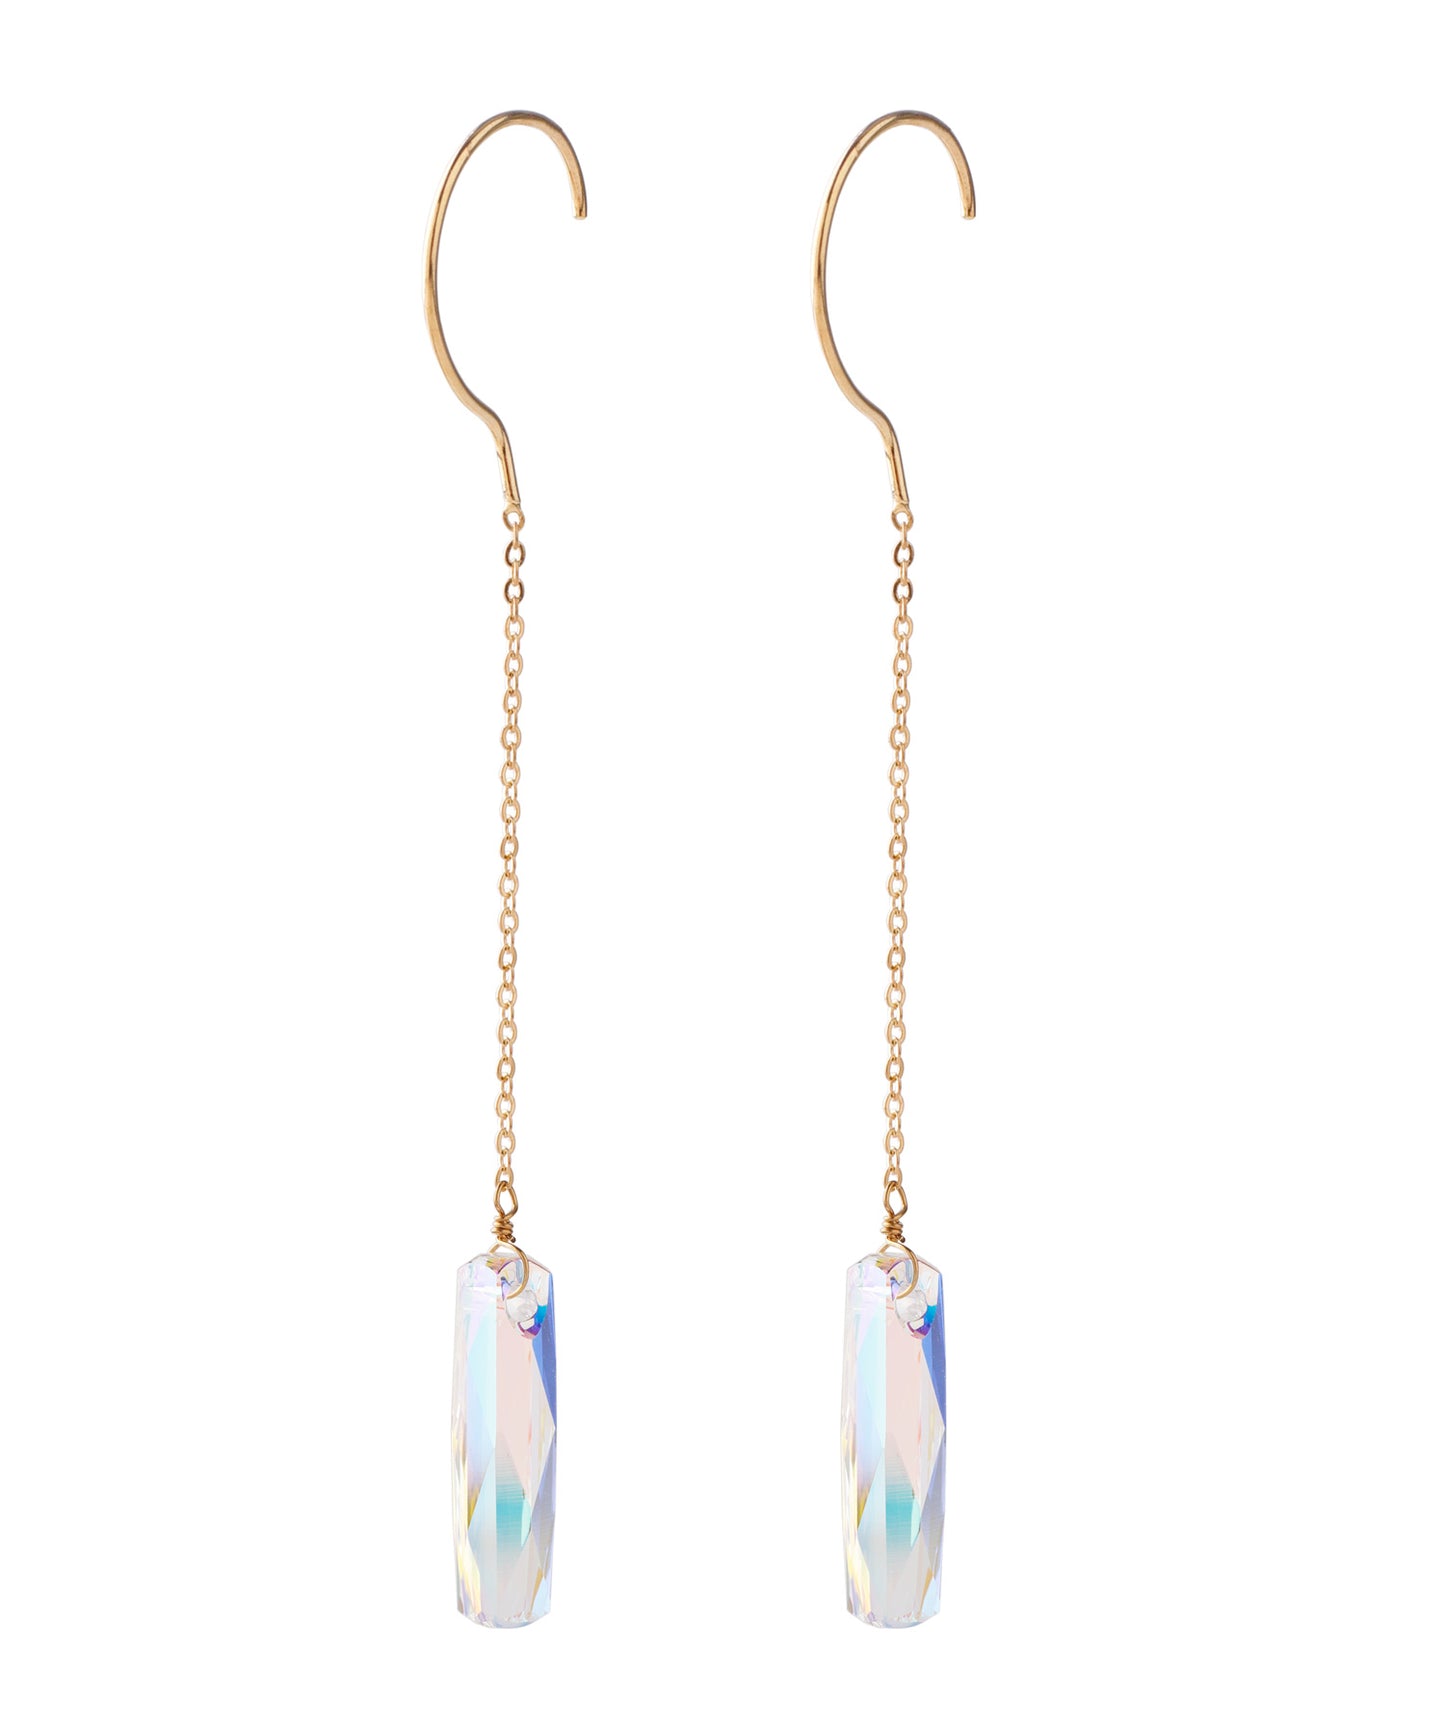 Crystal glass Long Earrings[B][Sheerchic]